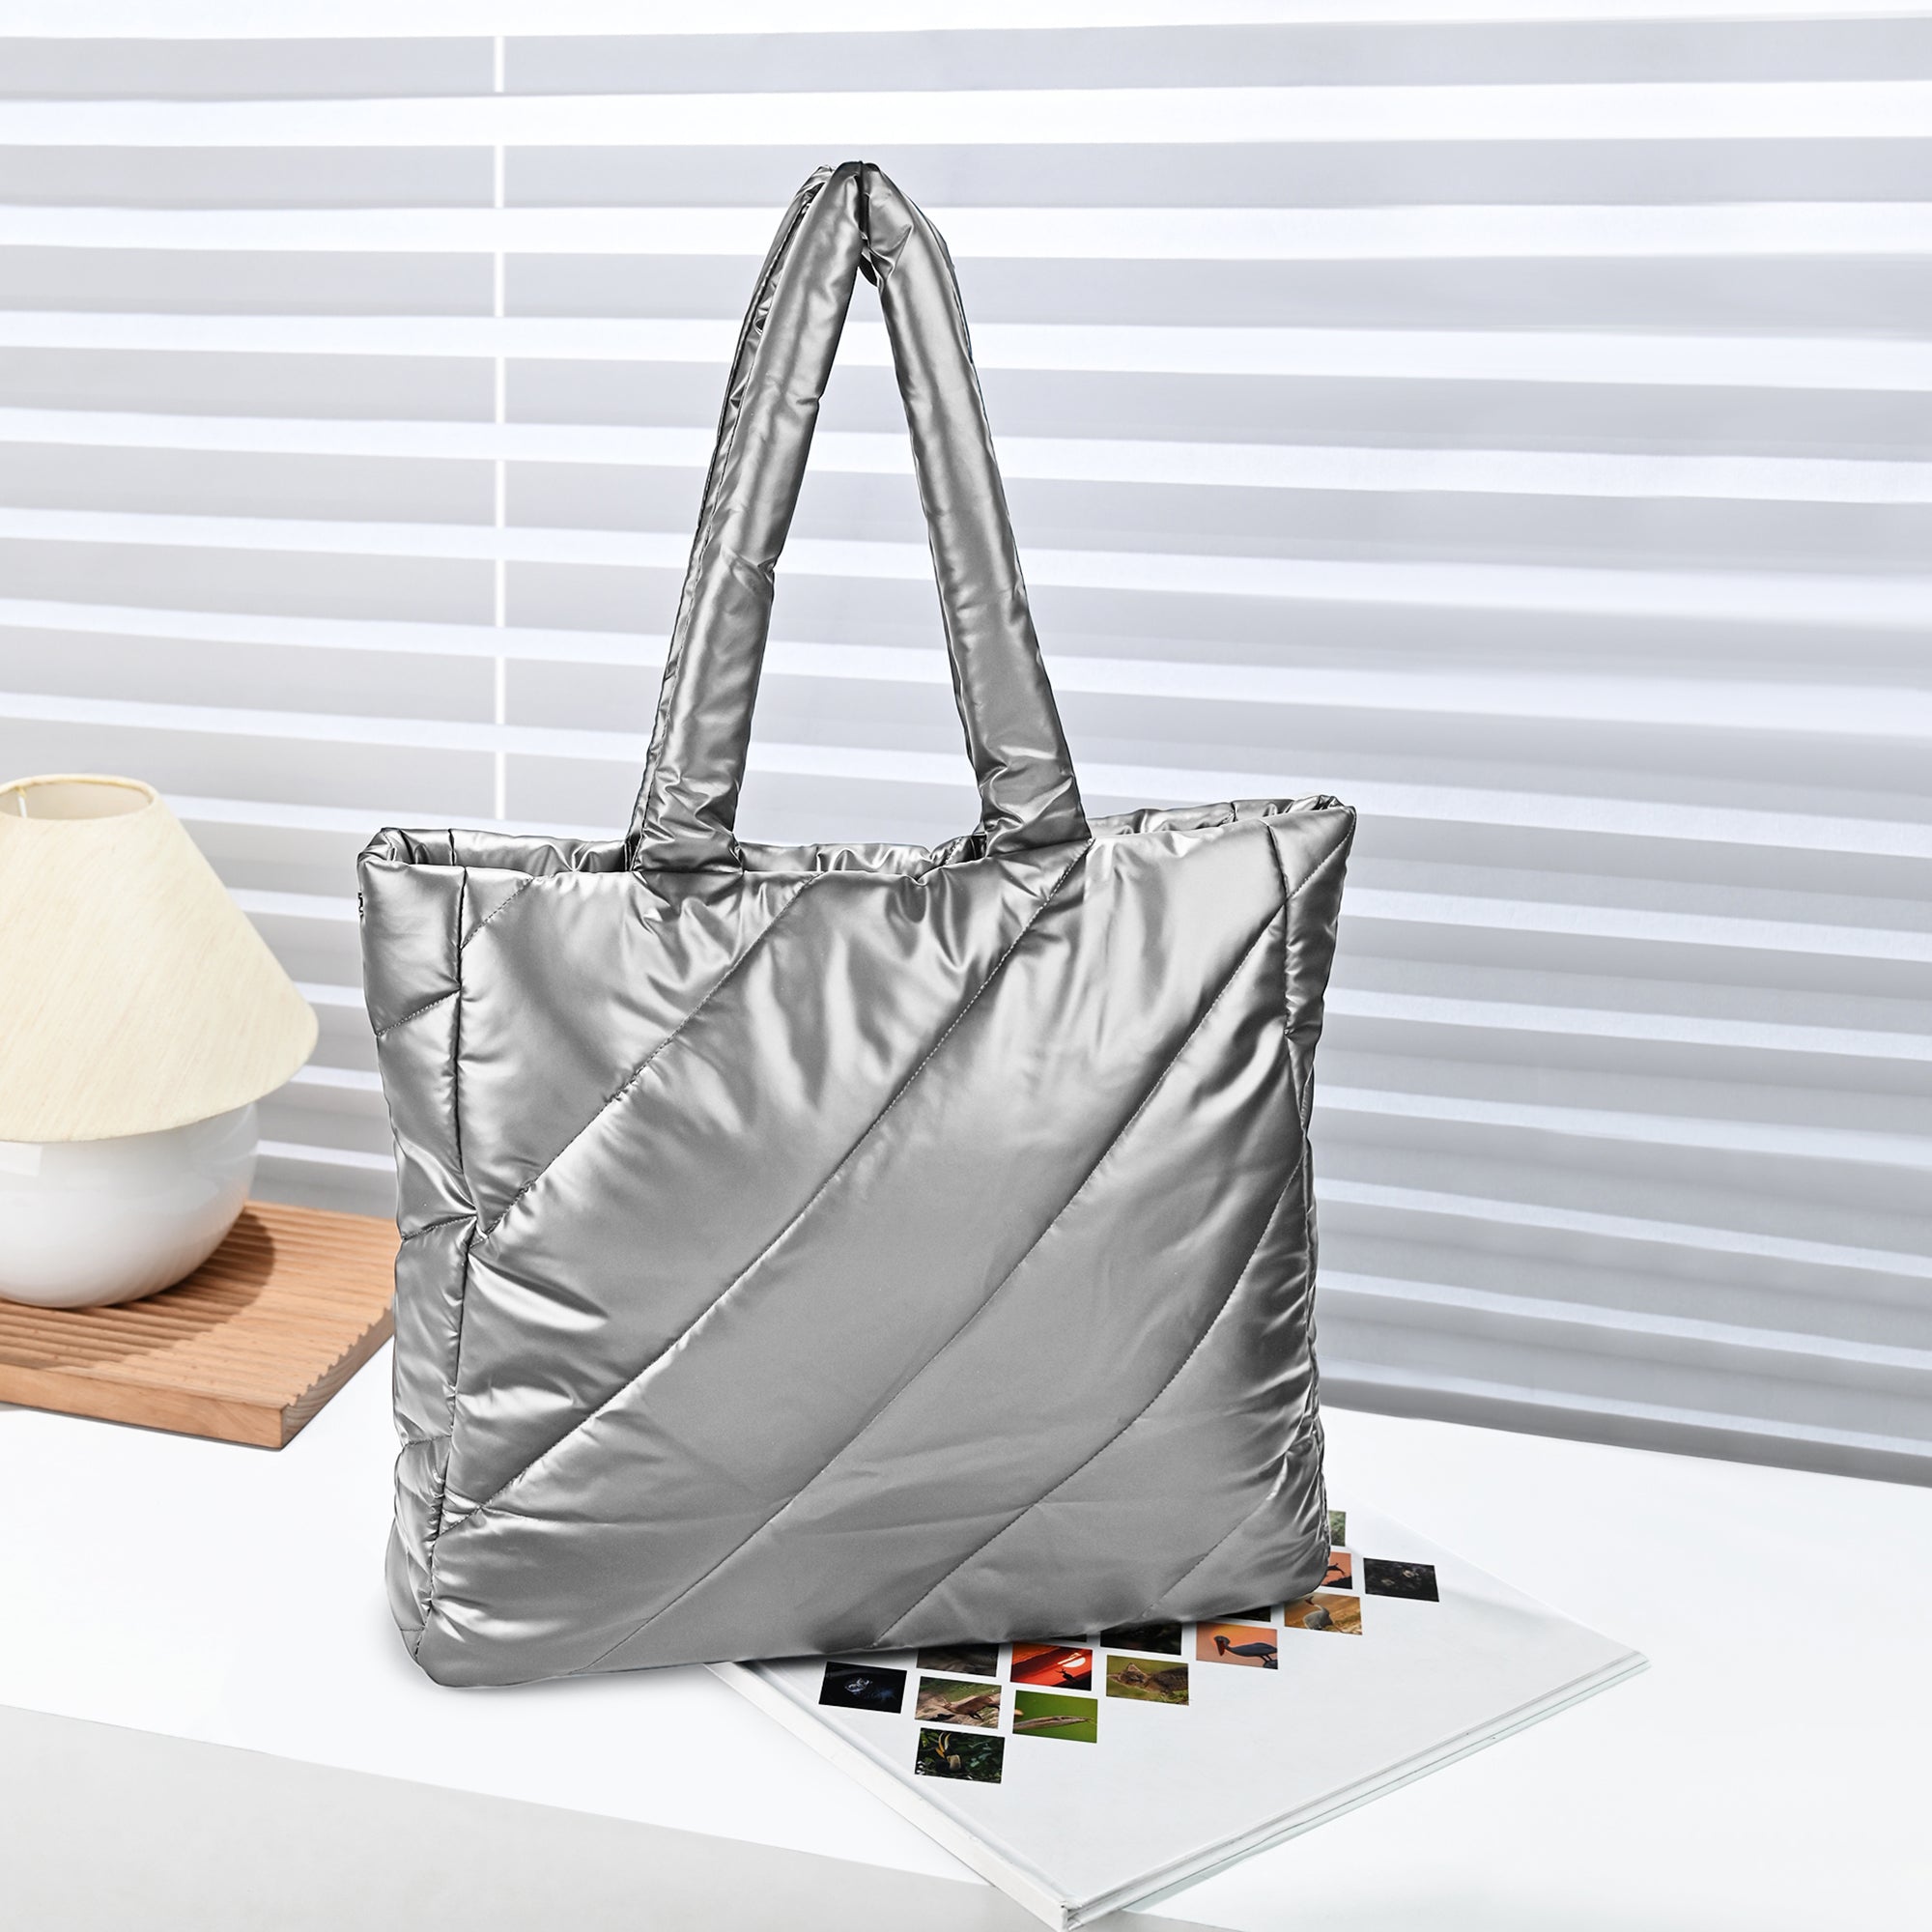 Silver Metallic Tote Bag